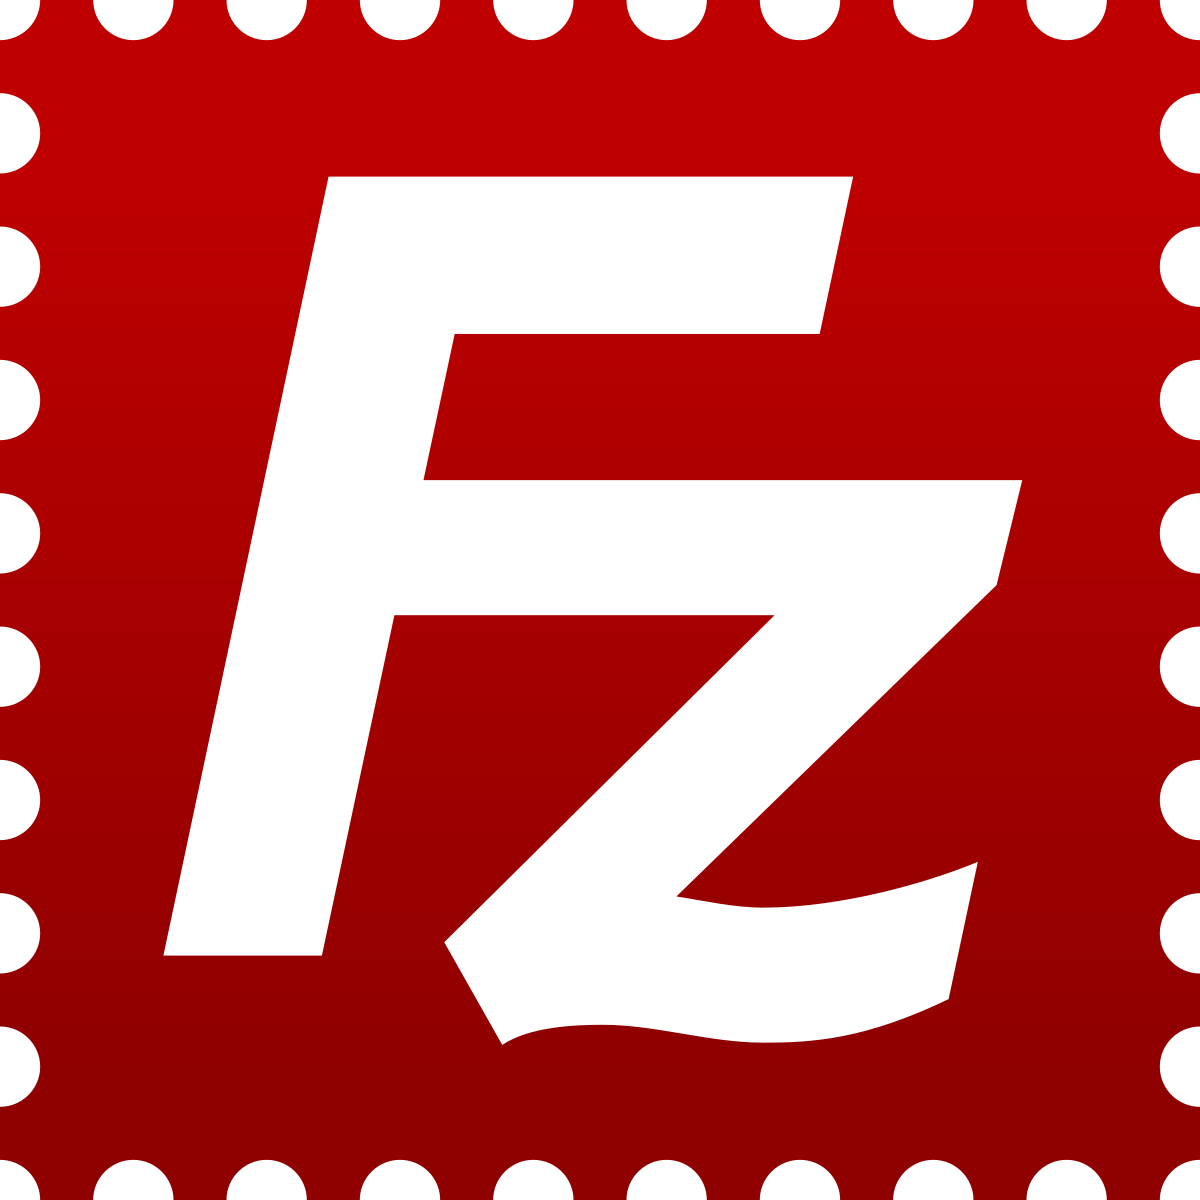 Installing FileZilla on an Ubuntu 20.04 LTS server